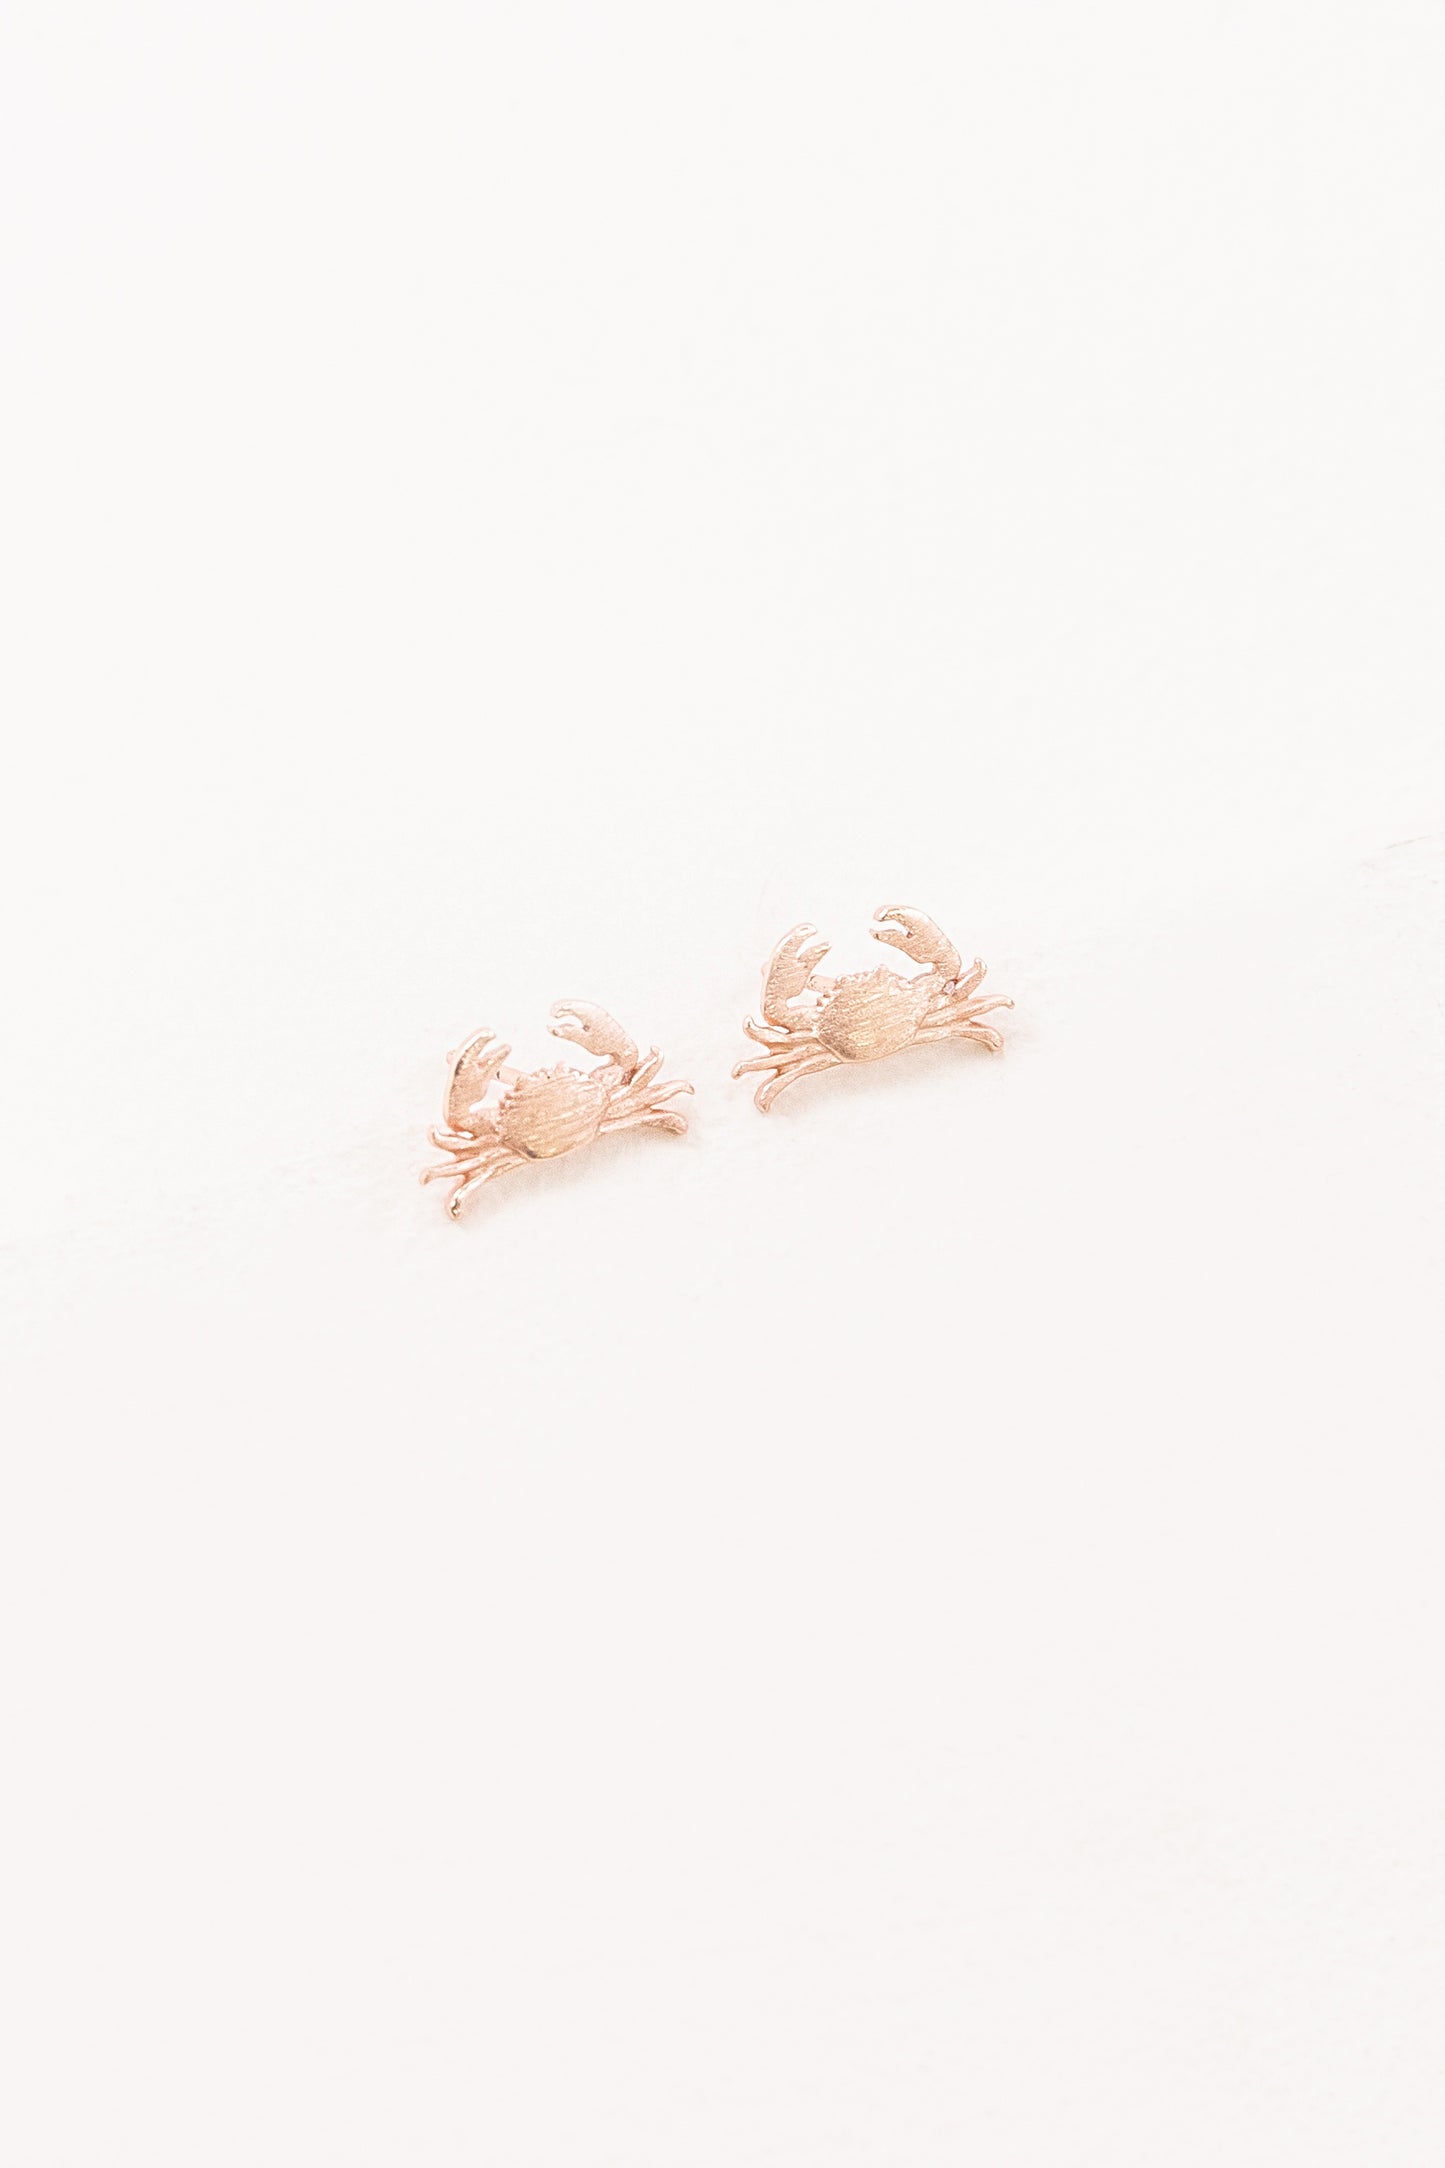 Maryland Crab Earrings (18K & 24K Gold)